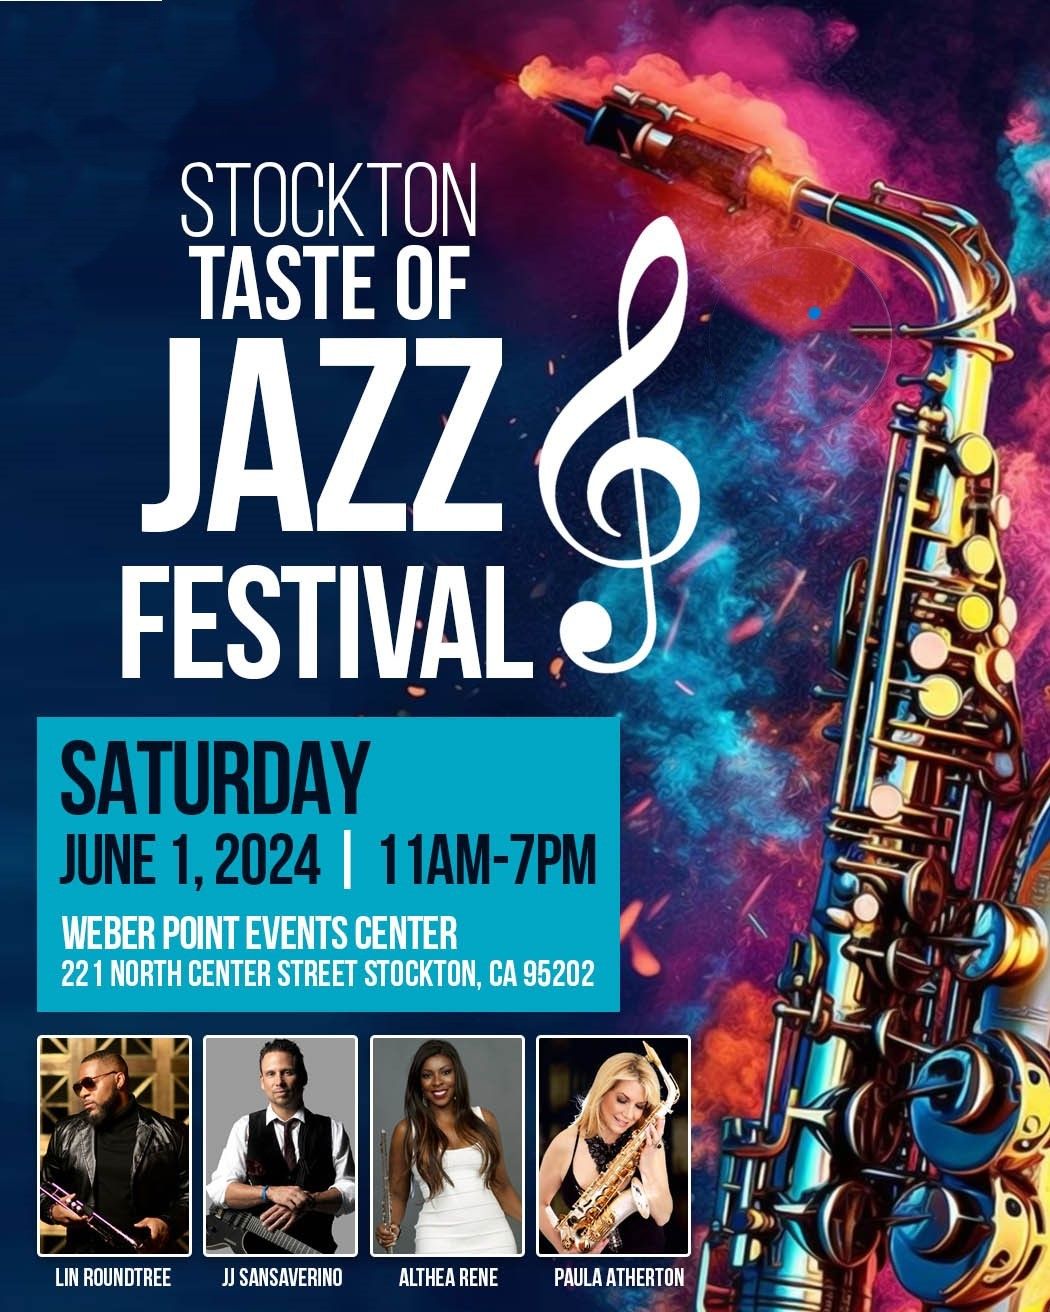 Stockton Taste of Jazz Festival